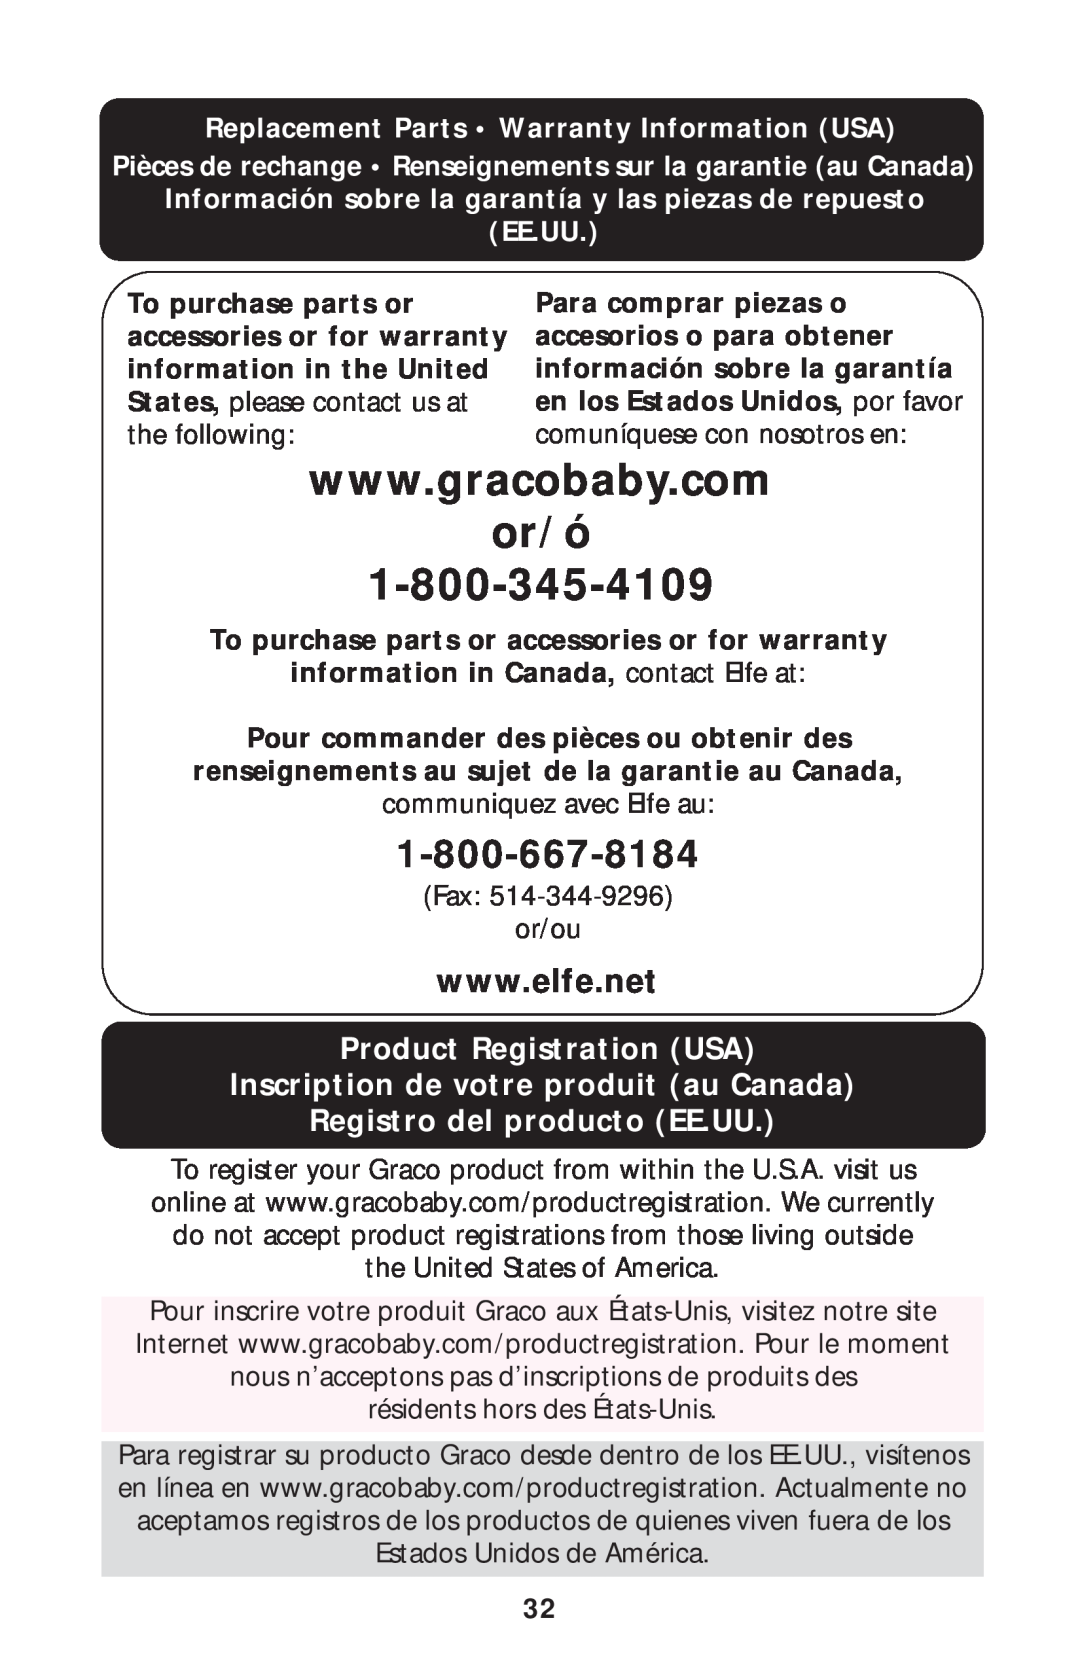 Graco ISPS055AA manual or/ó, Product Registration USA Inscription de votre produit au Canada, Registro del producto EE.UU 